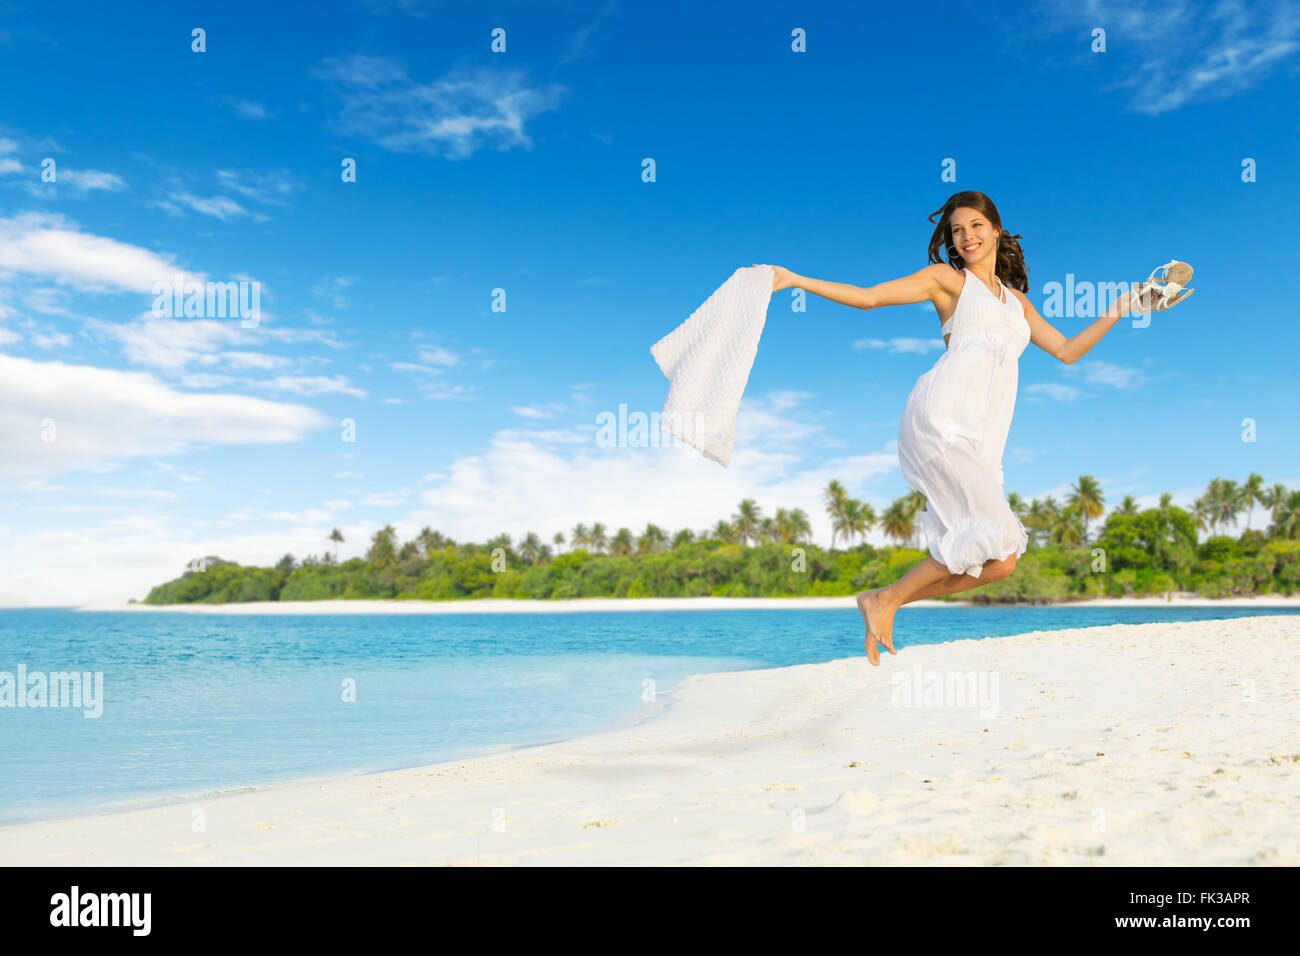 Beautiful girl jumping on tropical beach Stock Photo